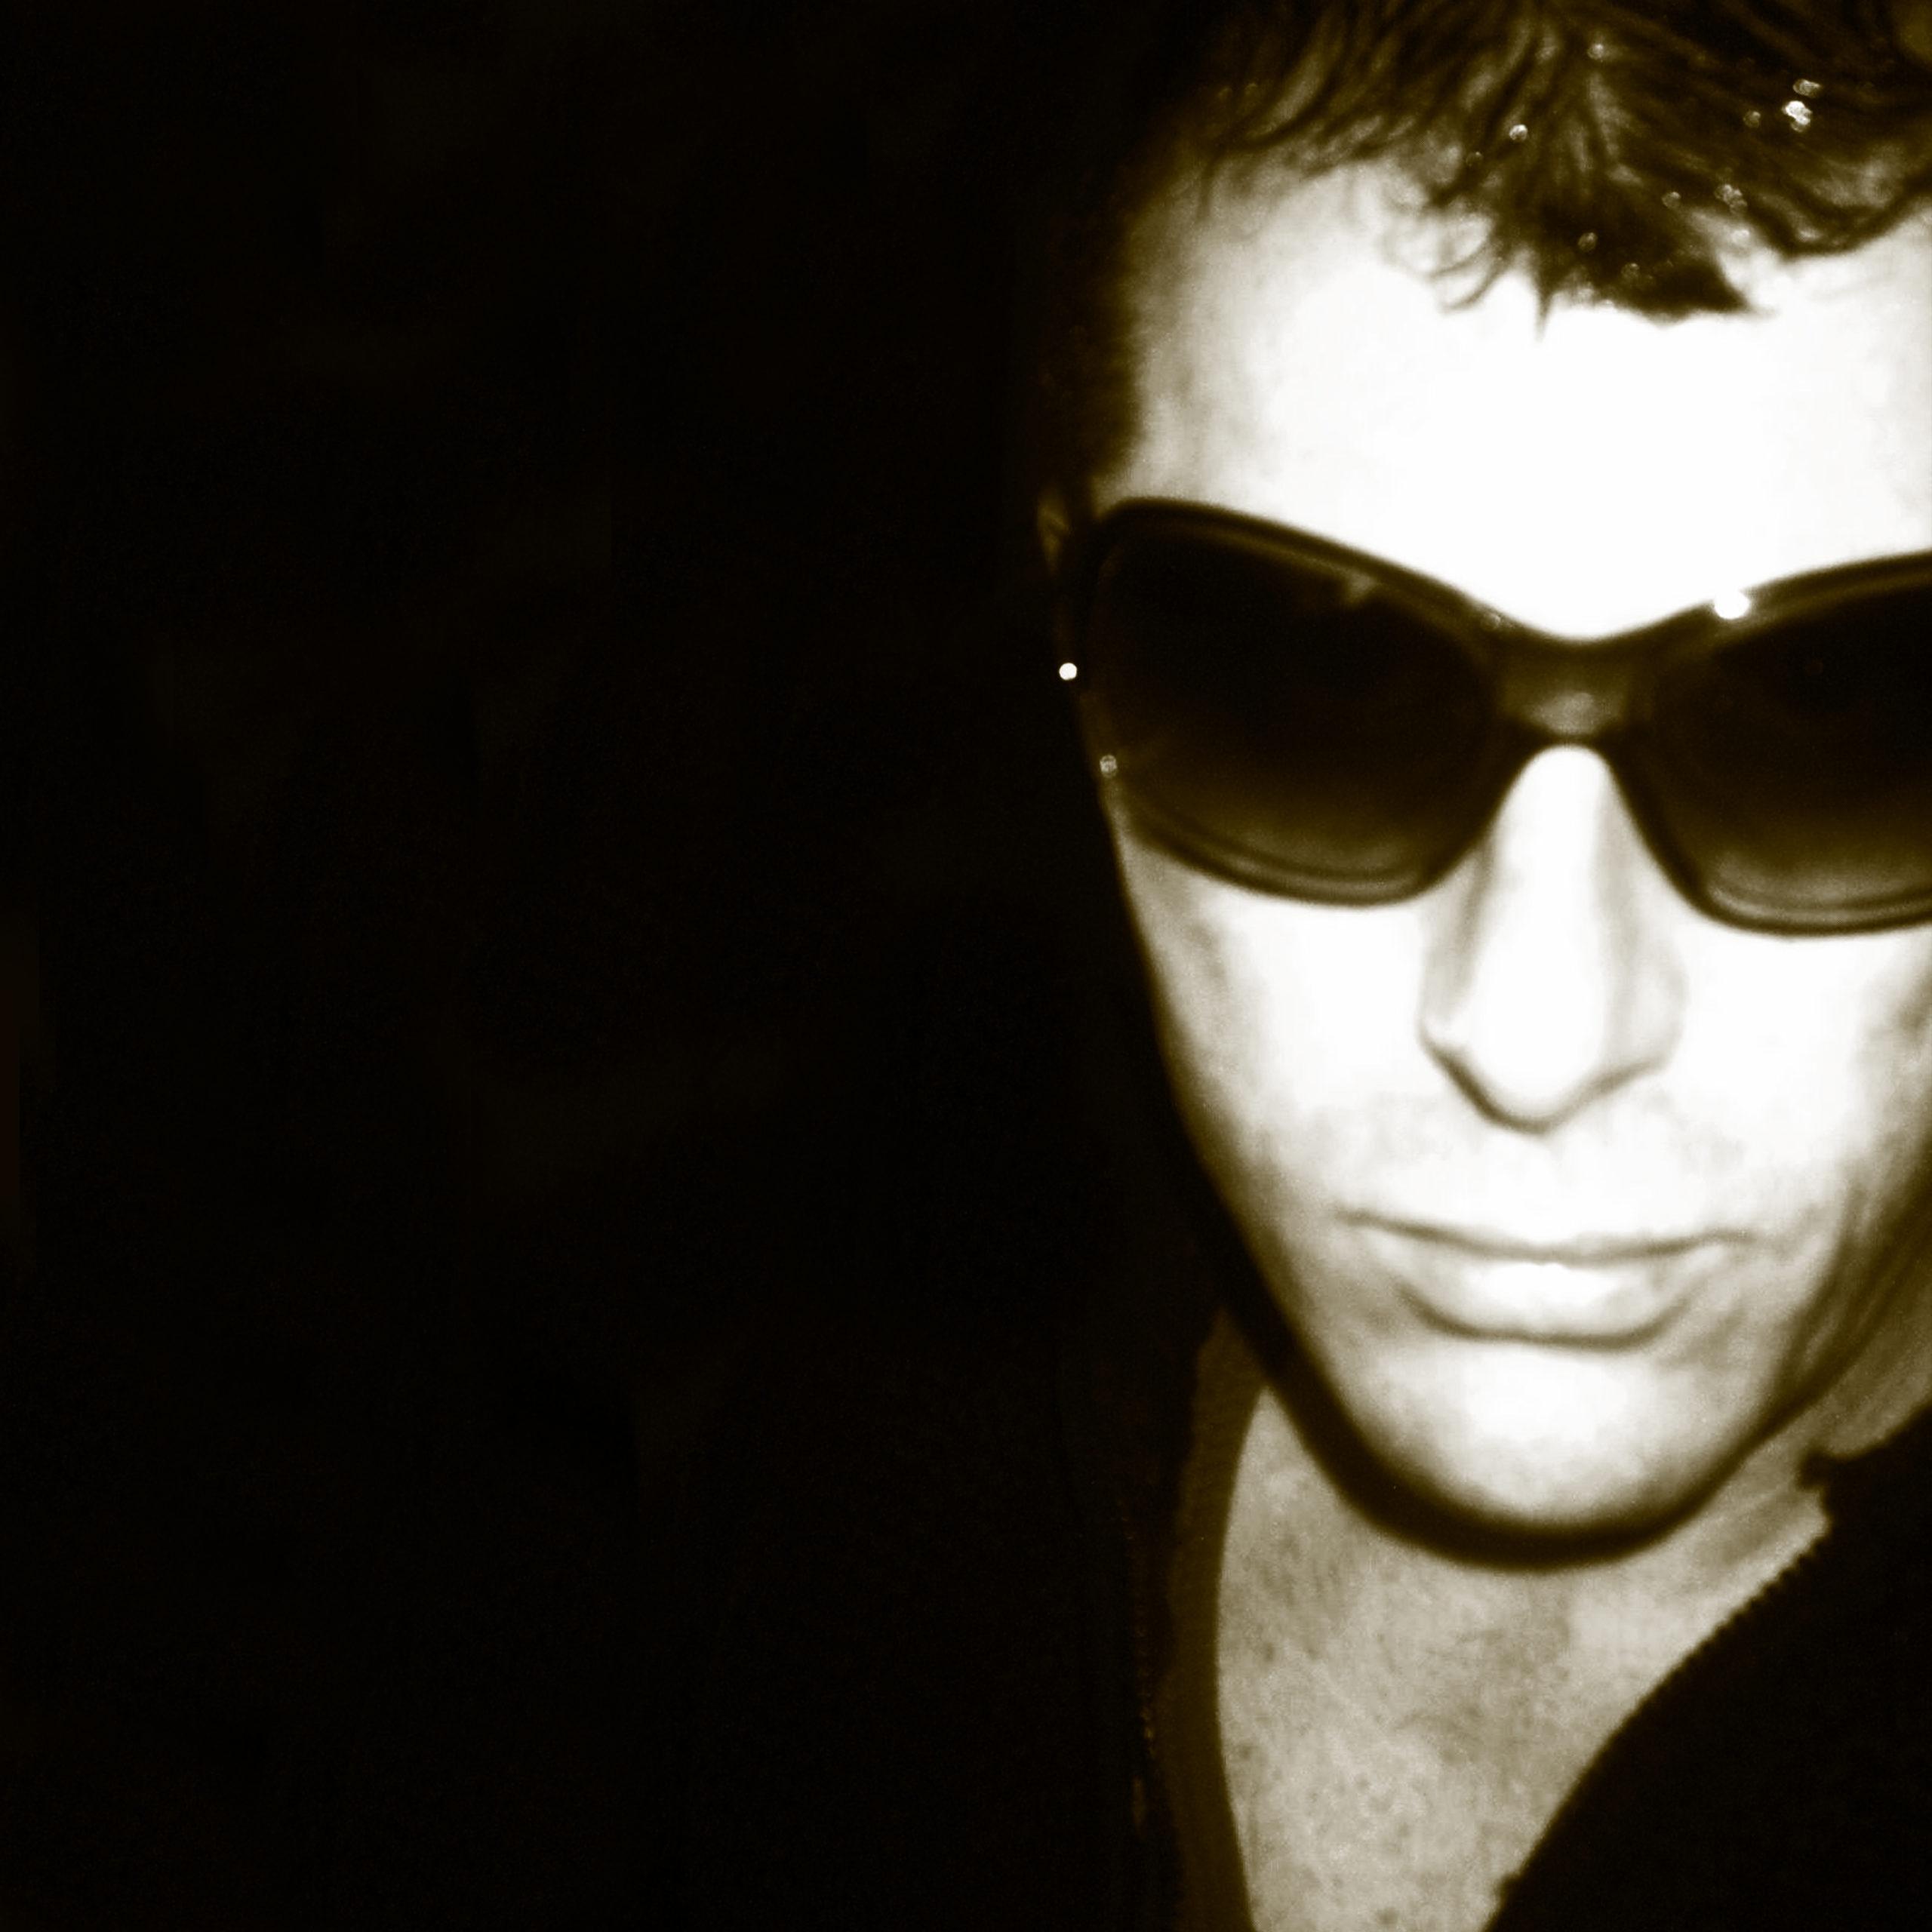 black and white headshot of a man wearing sunglasses